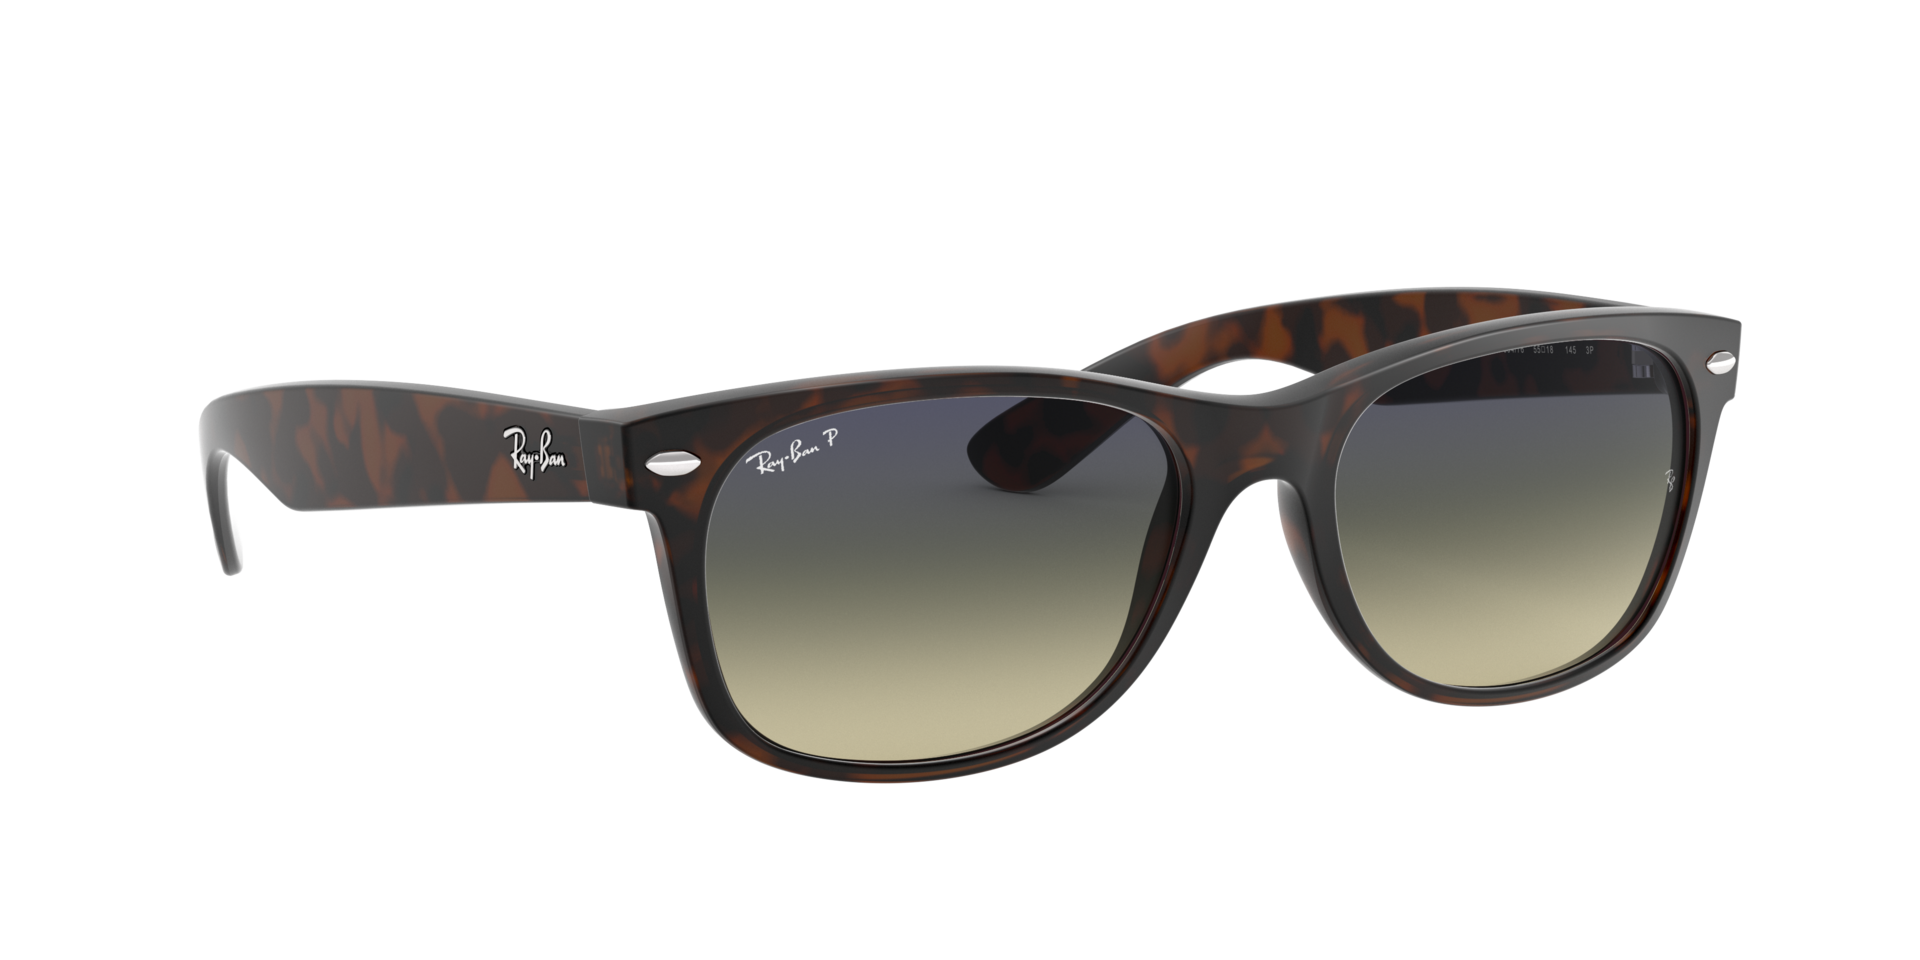 Buy Ray-Ban New Wayfarer Sunglasses Online.